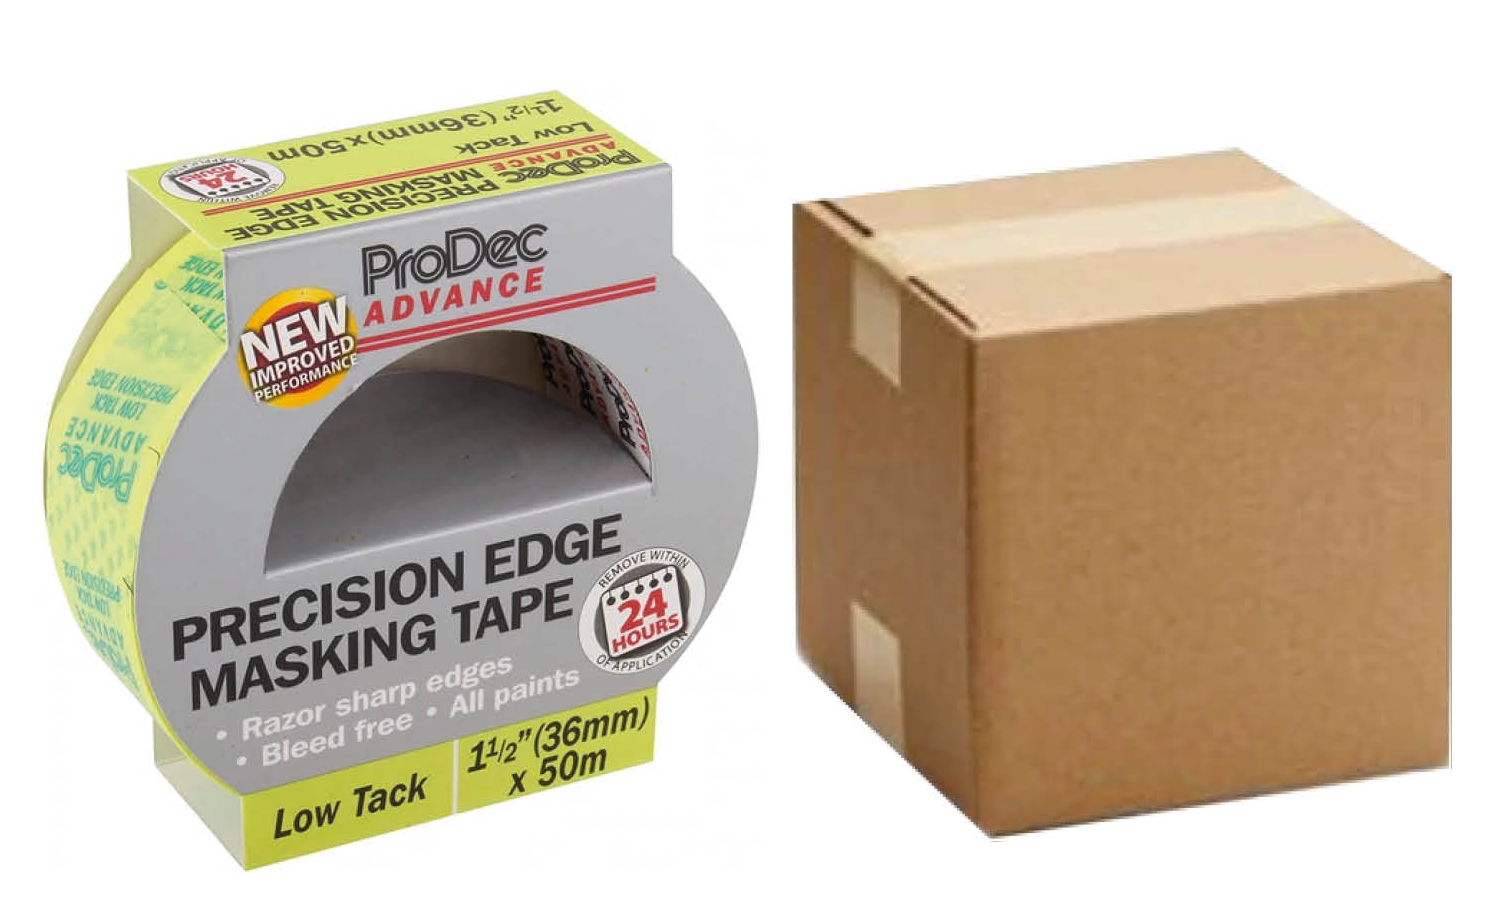 Prodec Advance Precision Edge Low Tack Masking Tape (Boxes)